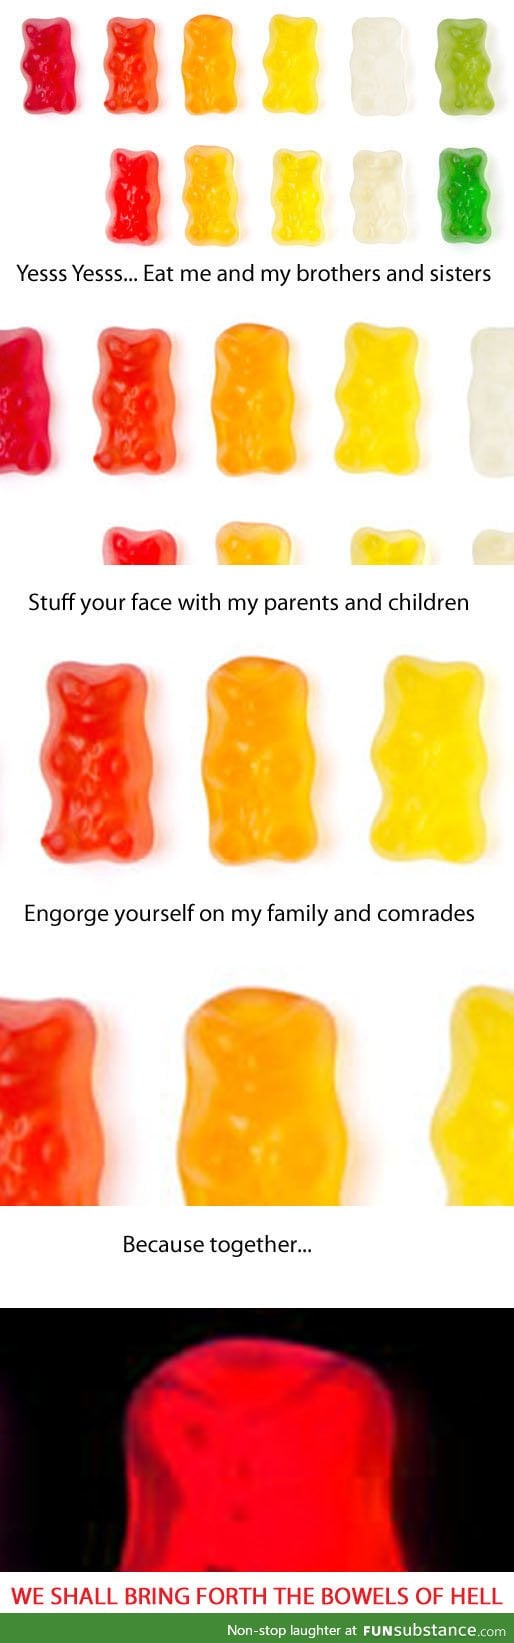 Sugar free gummi bears